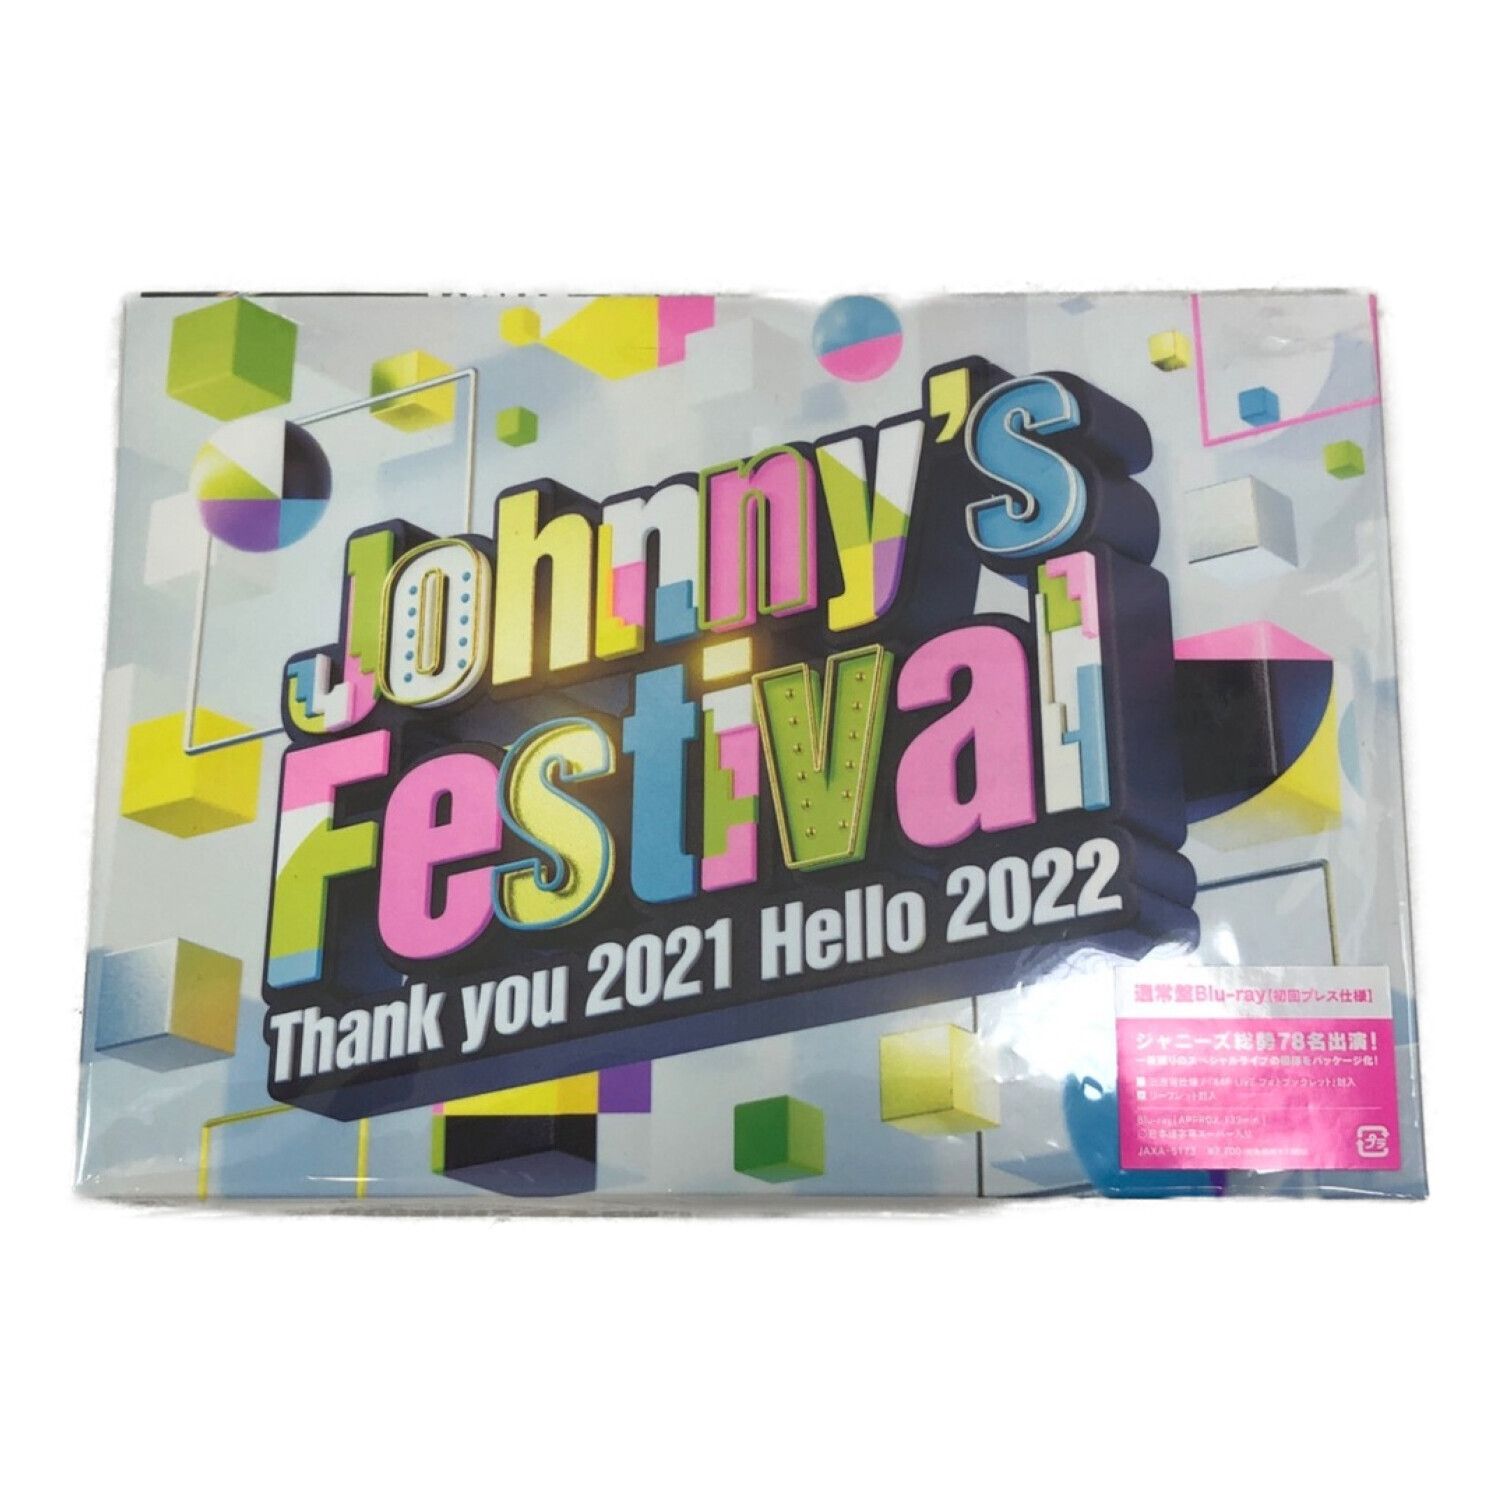 Johnny's Festival～Thank you 2021 Hello 2022～ ブルーレイＤＶＤ ...